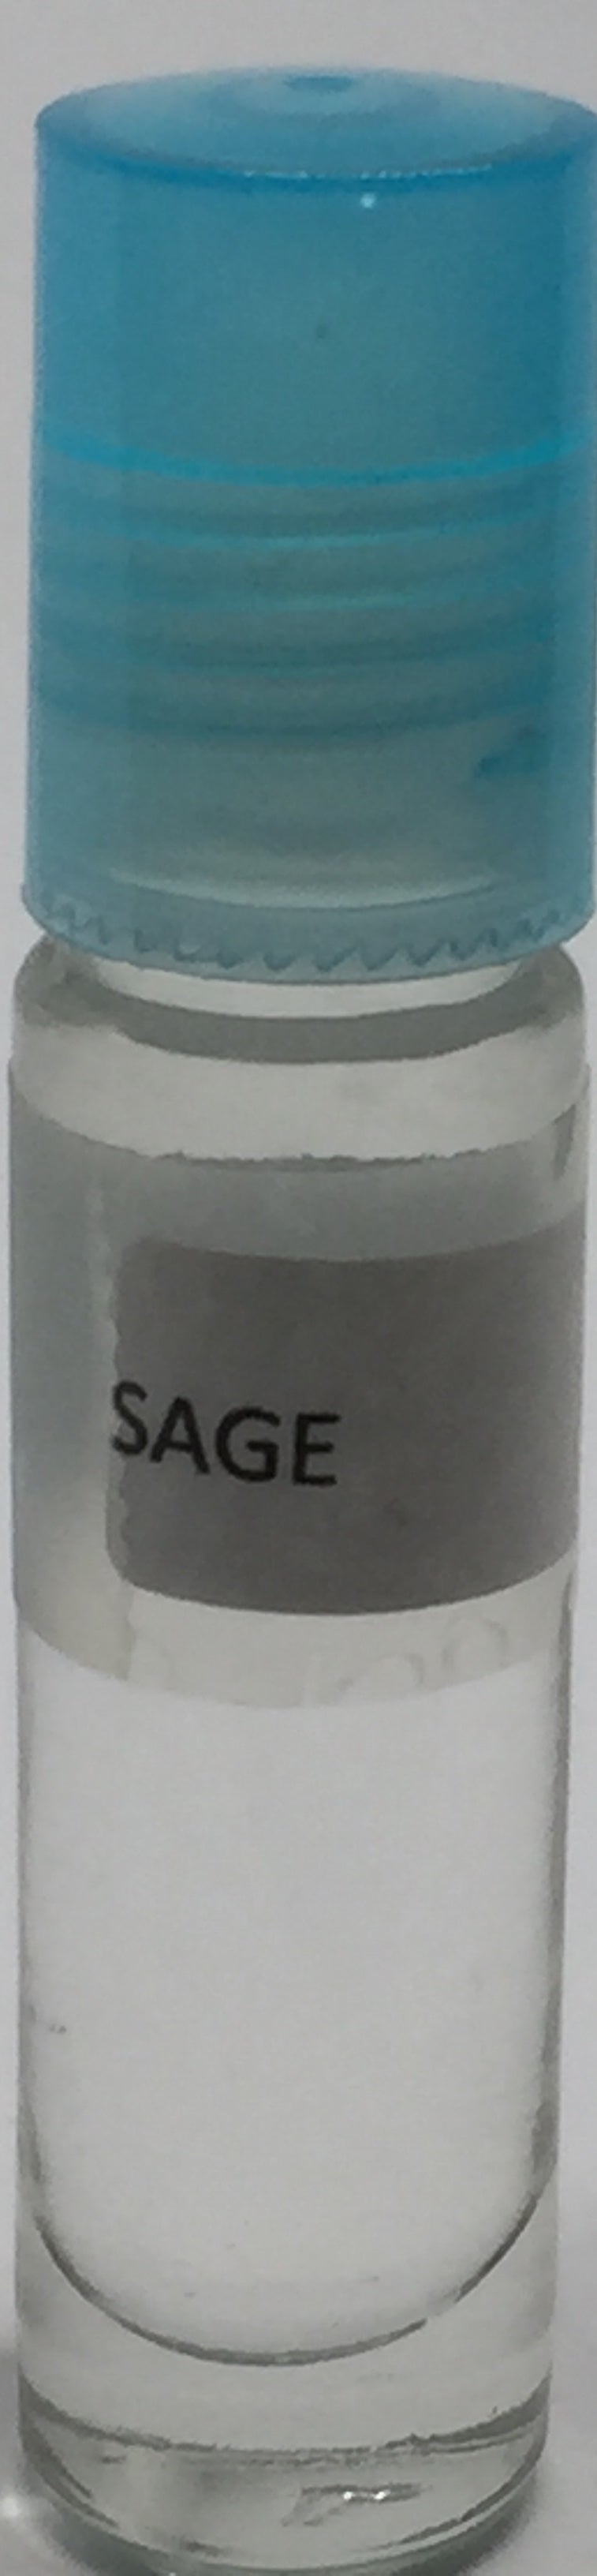 Sage: Fragrance (Perfume)Body Oil Unisex